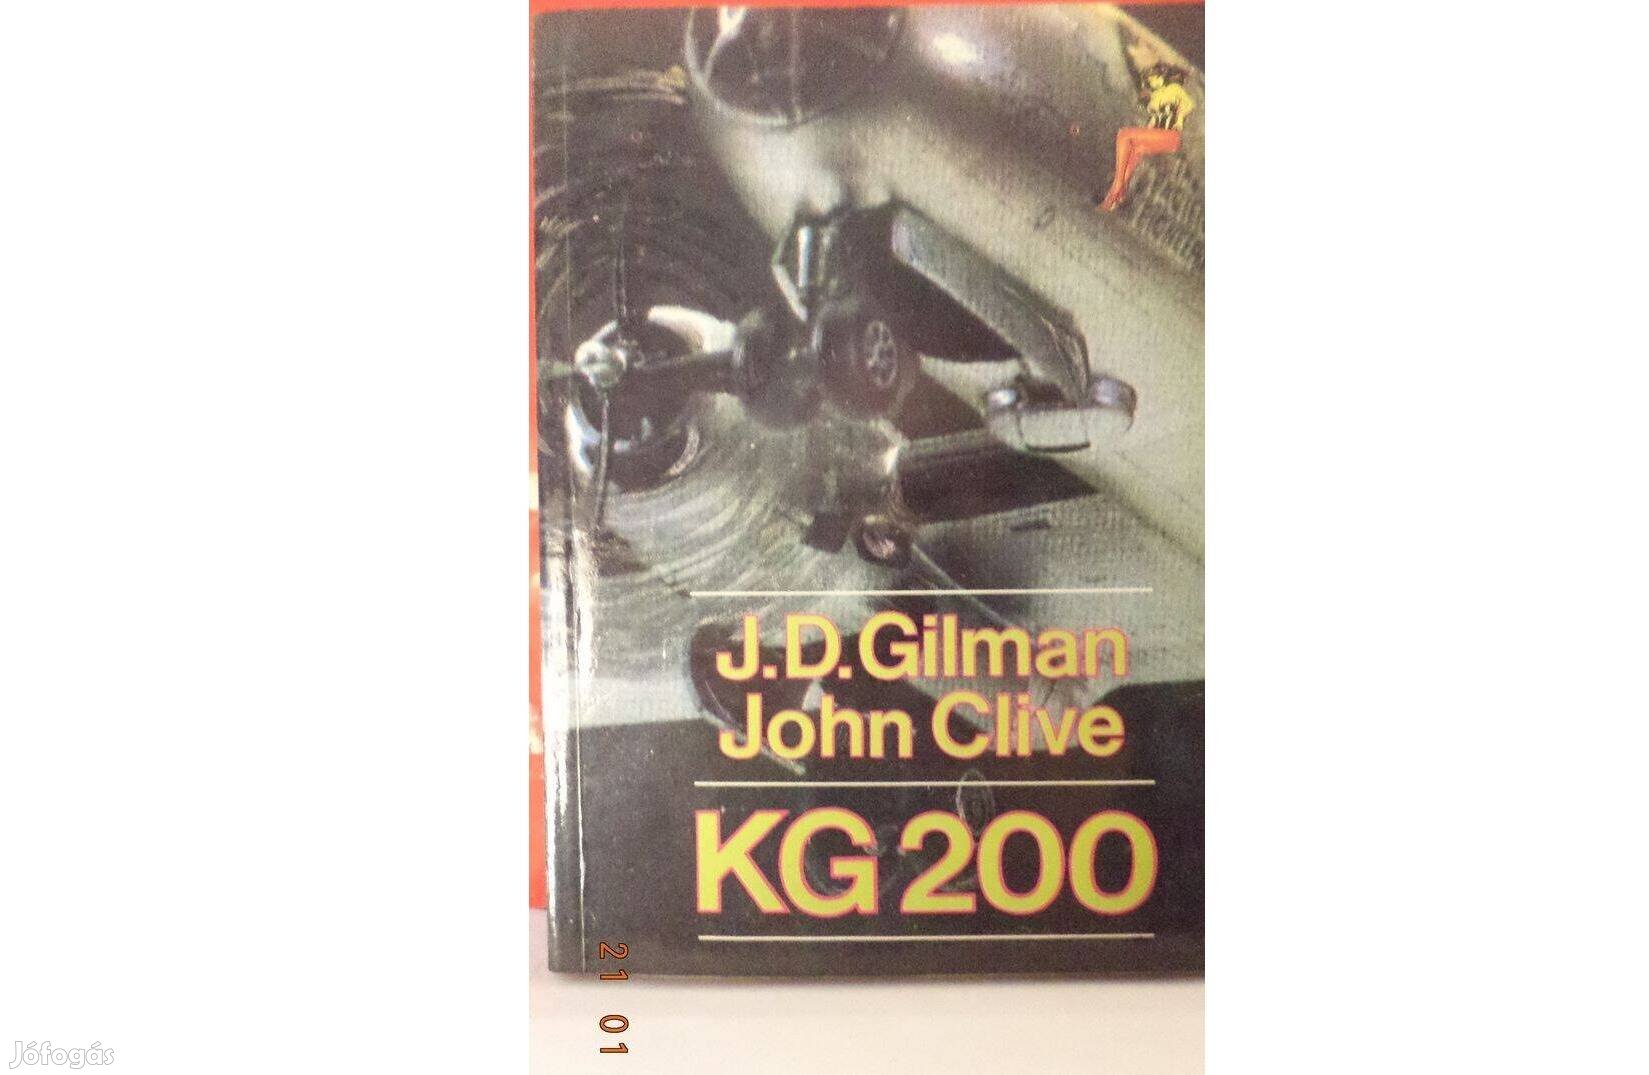 J.D. Gilman - John Clive: KG 200